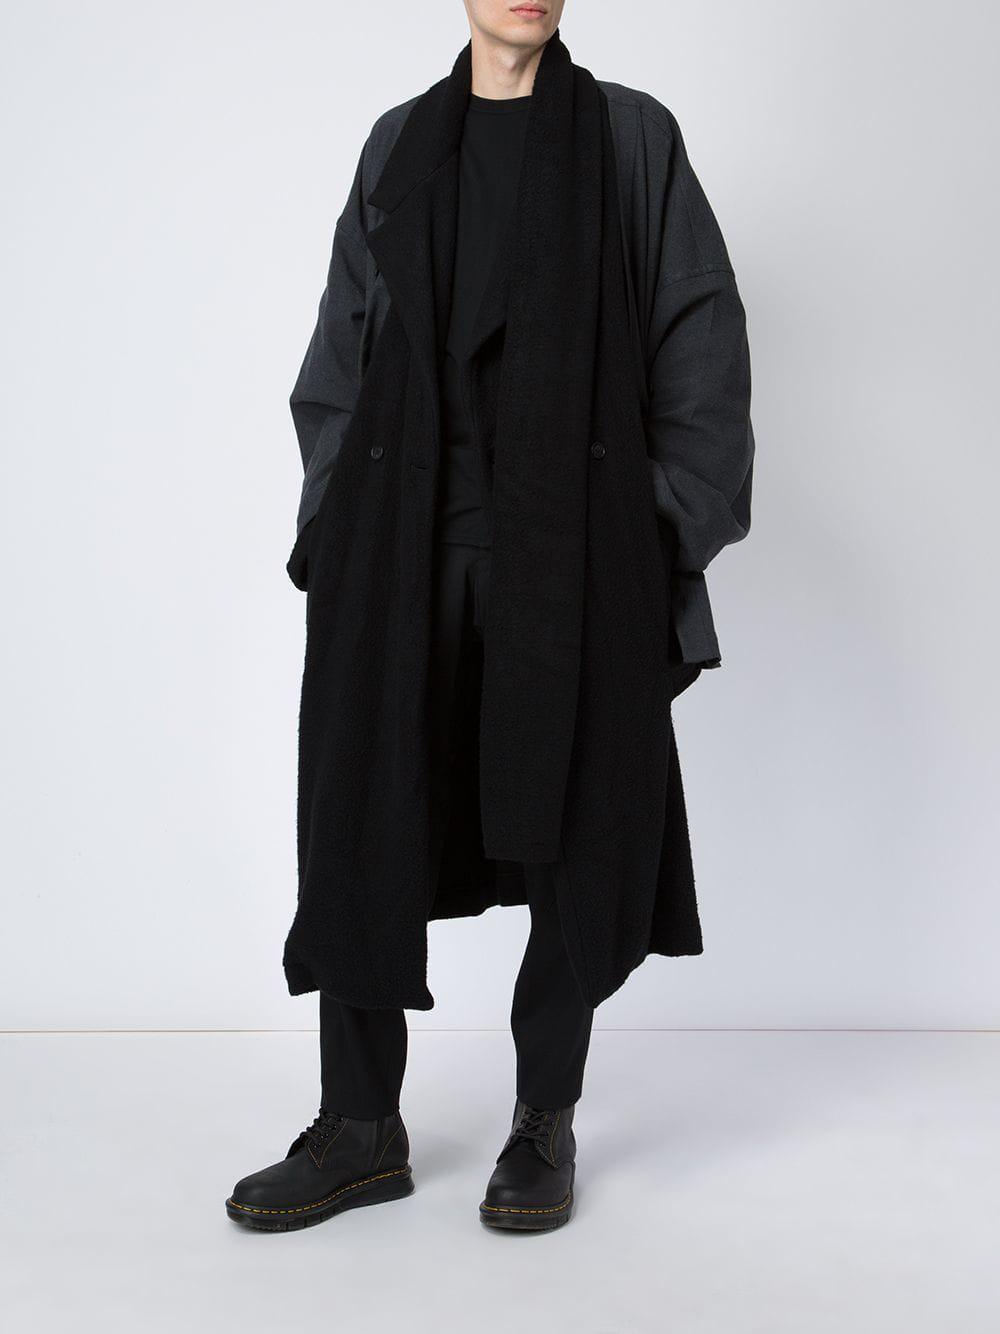 Yohji Yamamoto Wool Layered Long Coat in Black for Men - Lyst